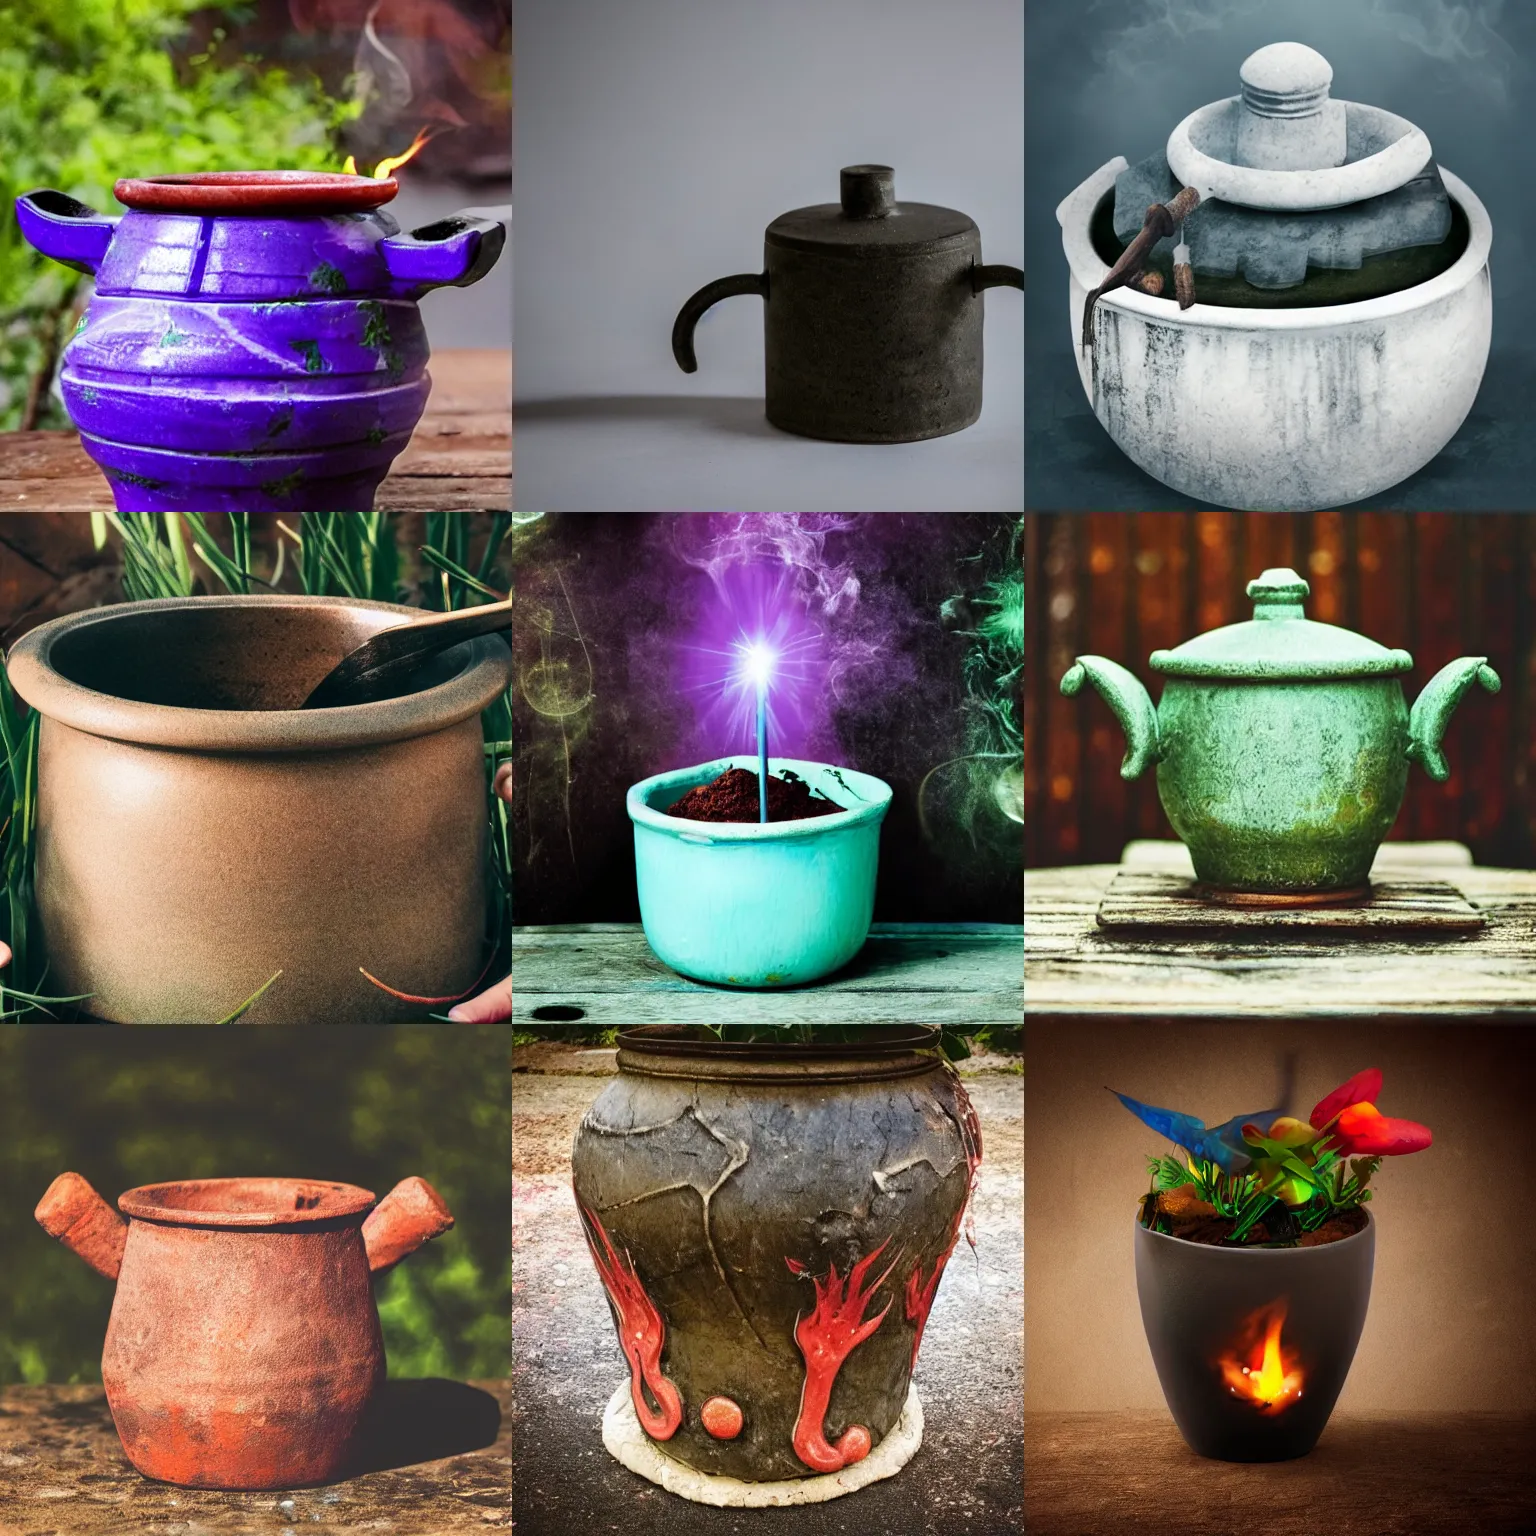 Prompt: photo of a magic pot with magic, fantasy